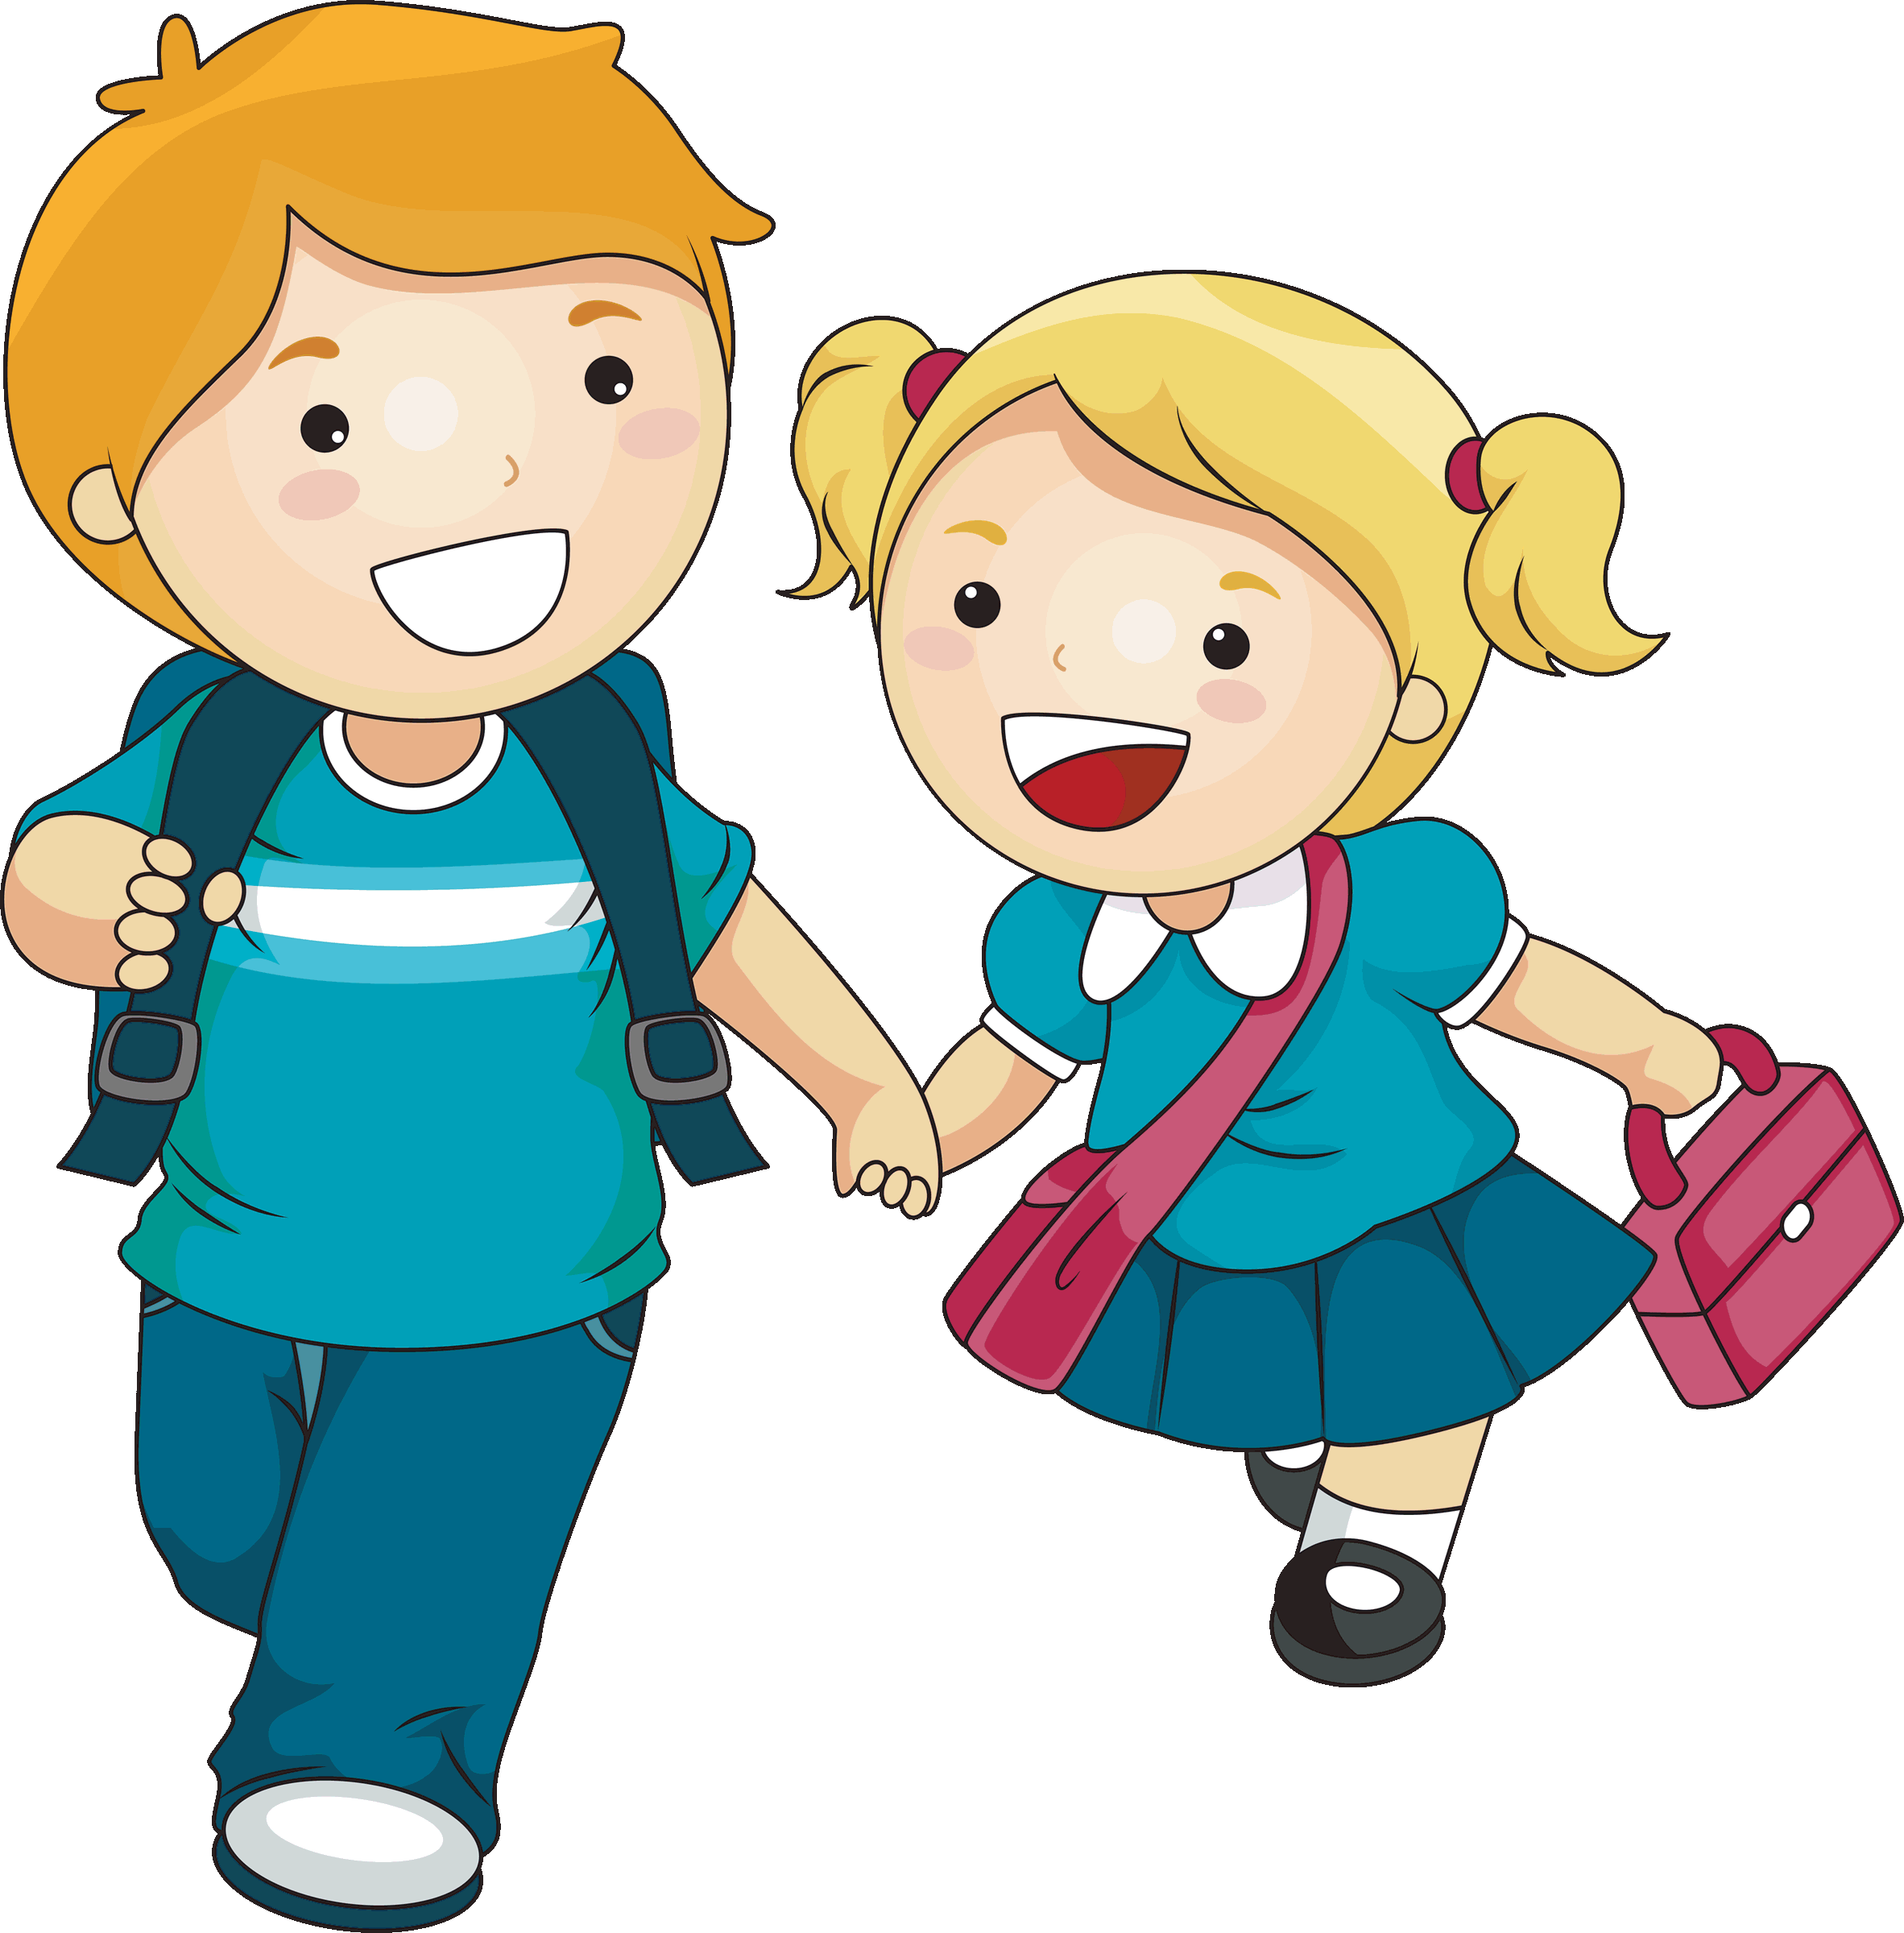 Children In School Clipart | Free Download Clip Art | Free Clip ...